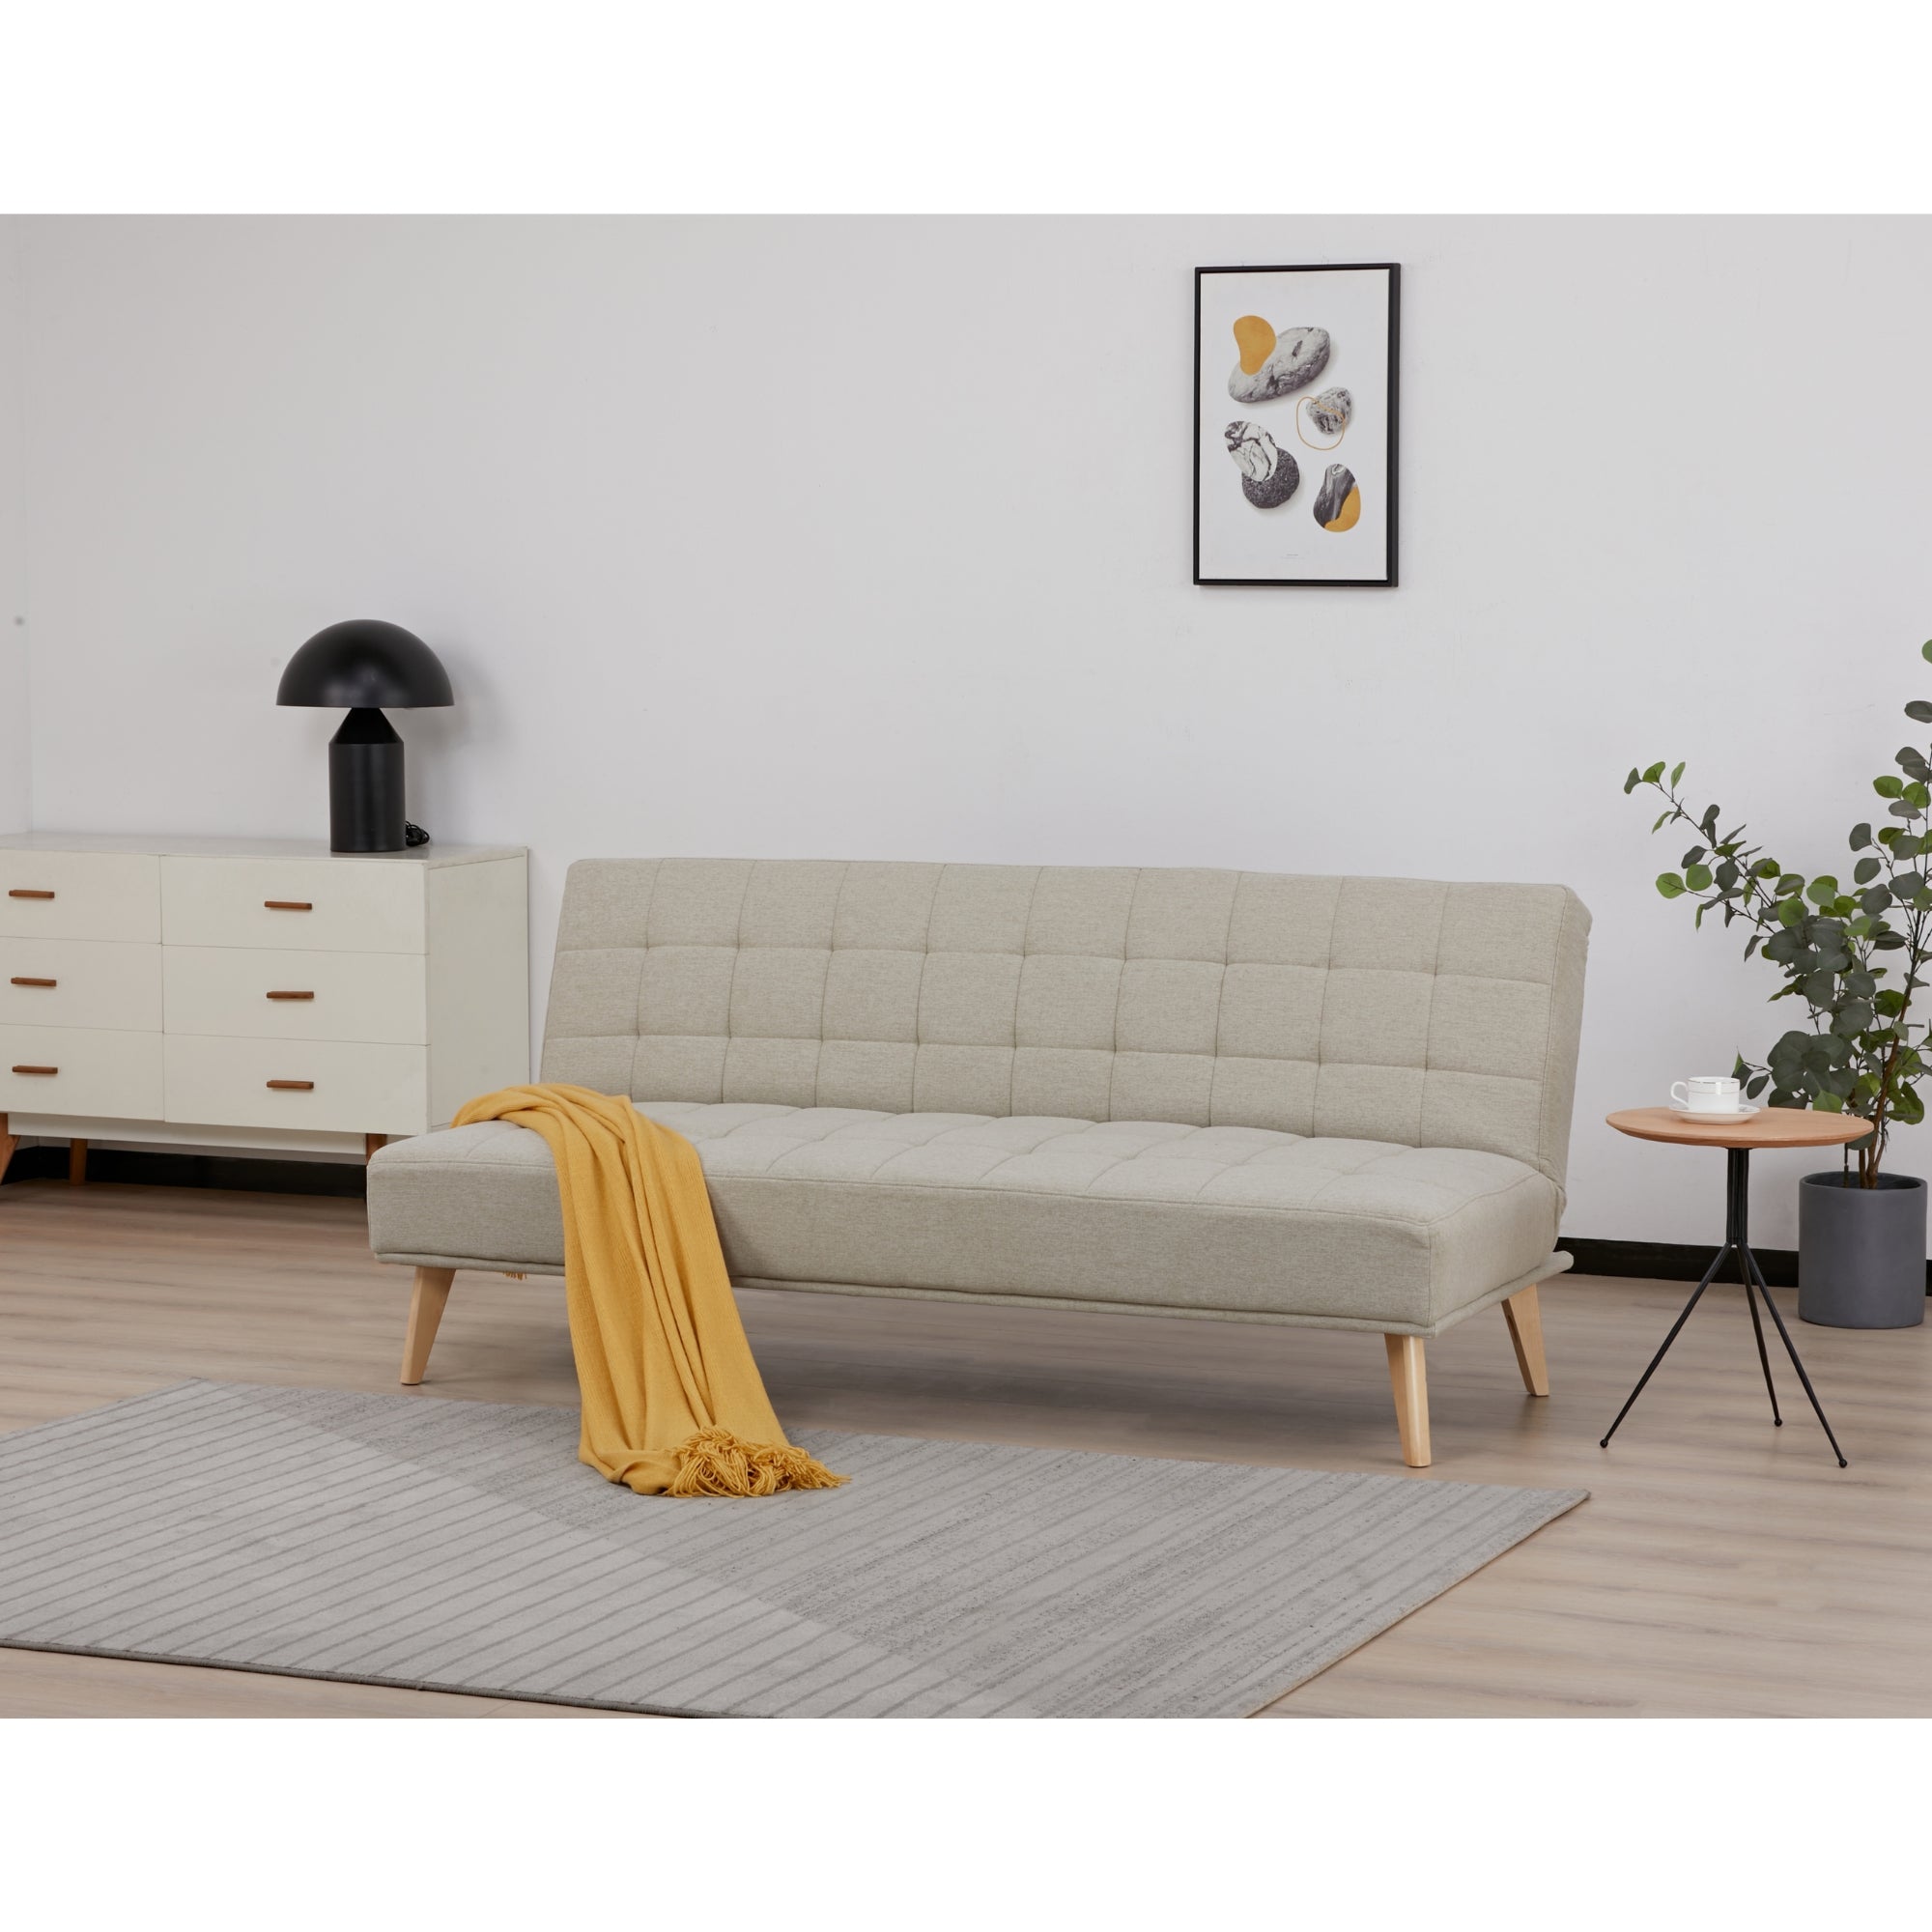 Beige 3 Seater Scandinavian Sofa Bed, Foam & S Springs